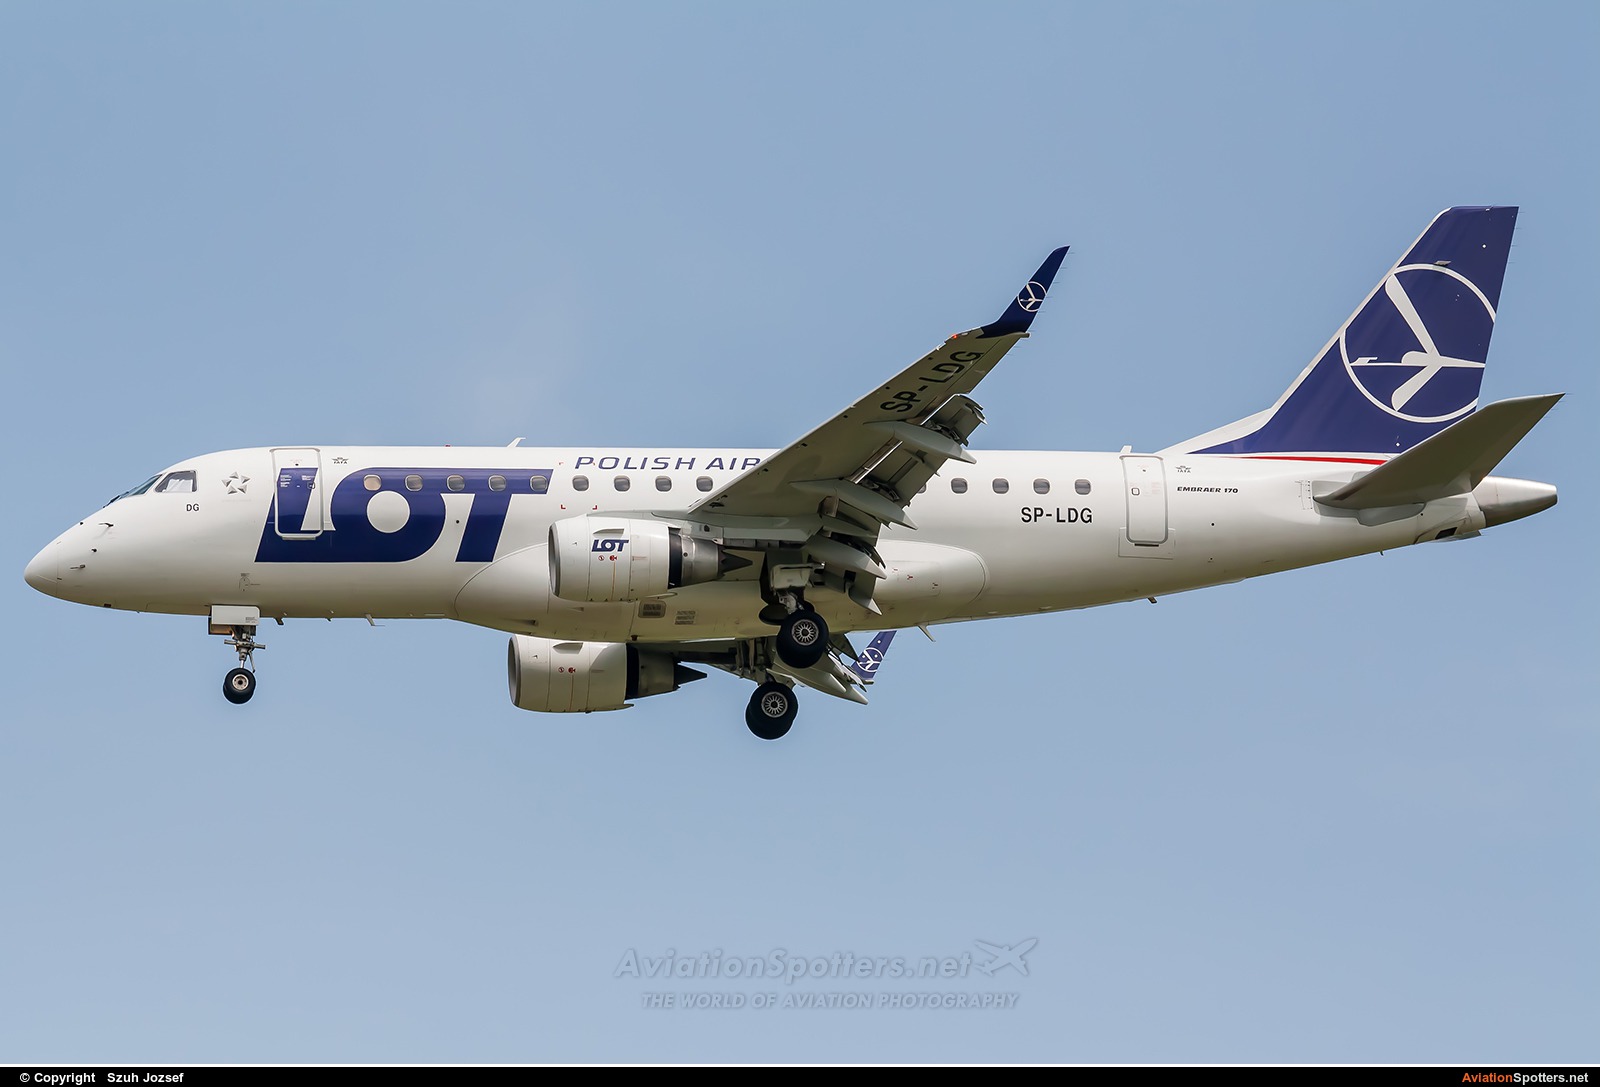 LOT - Polish Airlines  -  170  (SP-LDG) By Szuh Jozsef (szuh jozsef)